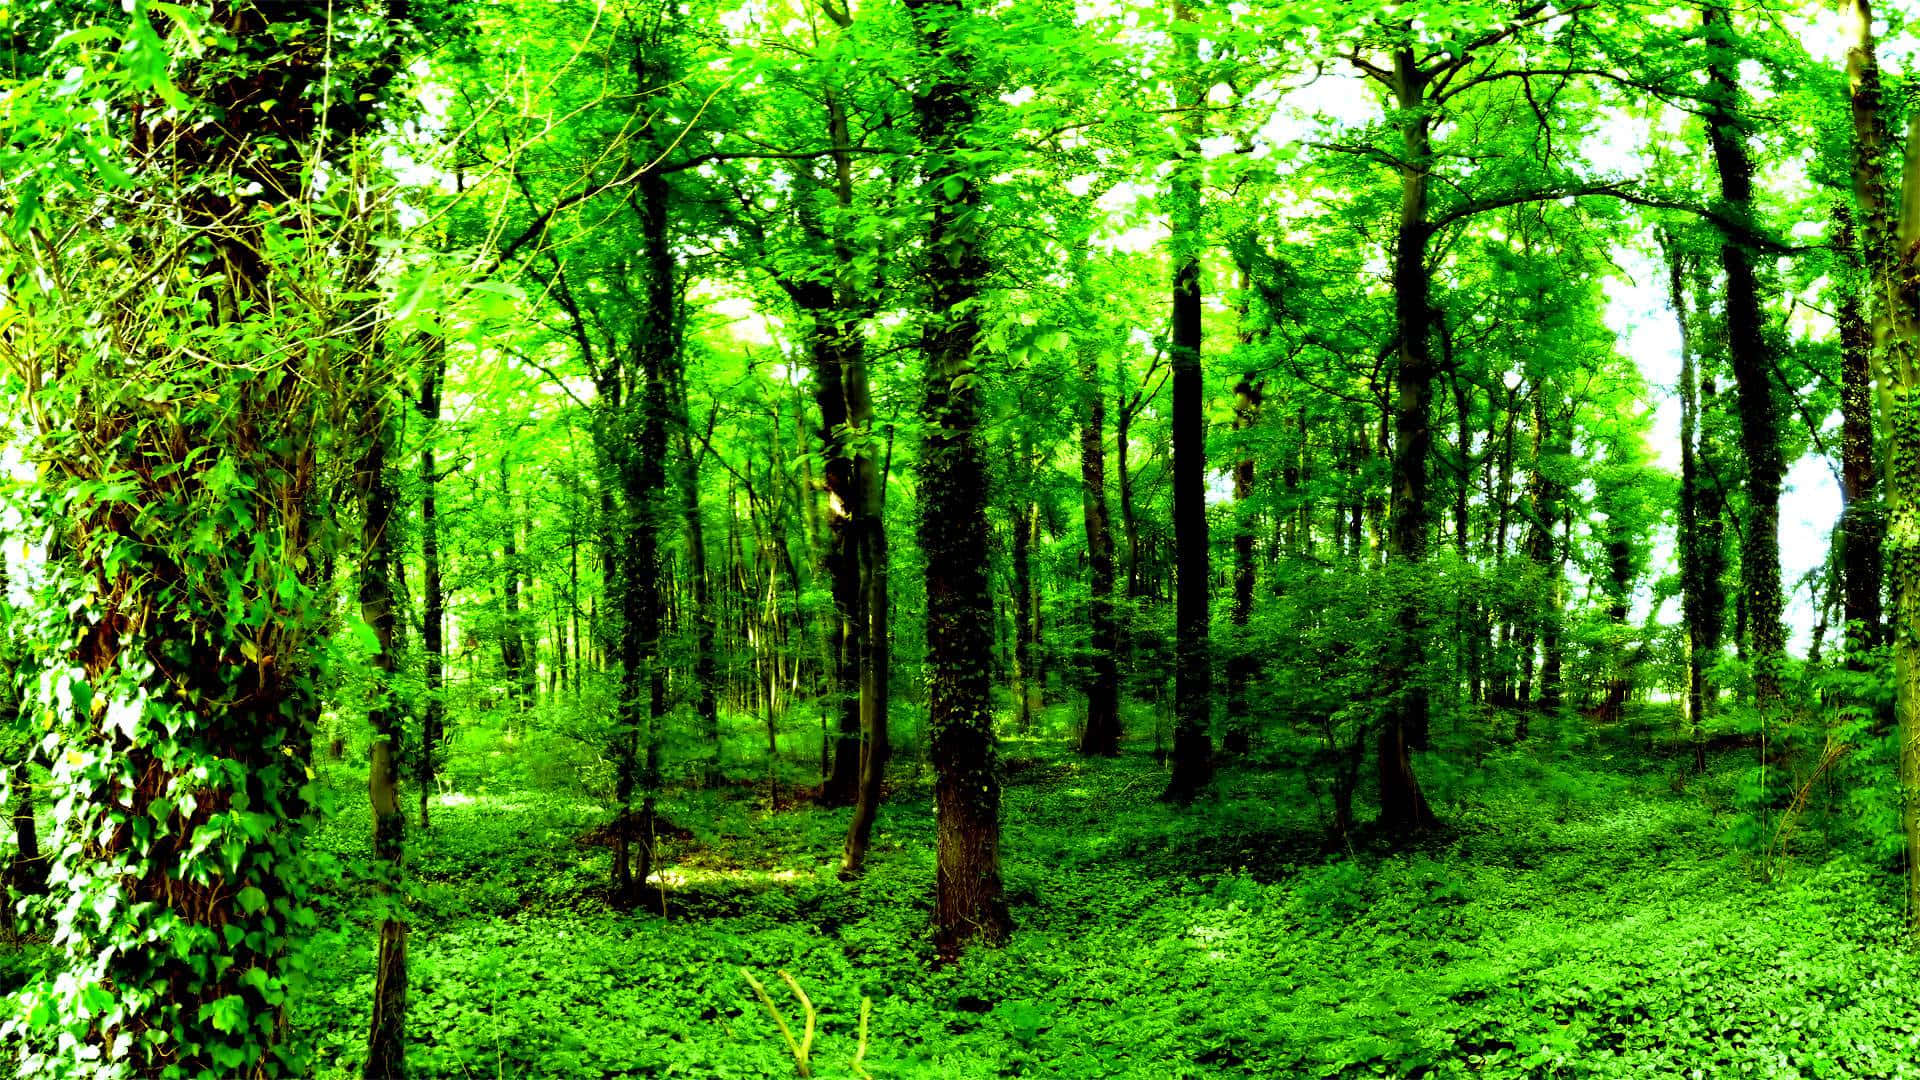 Nature’s Splendor - An Illuminated Forest Green Scene Background